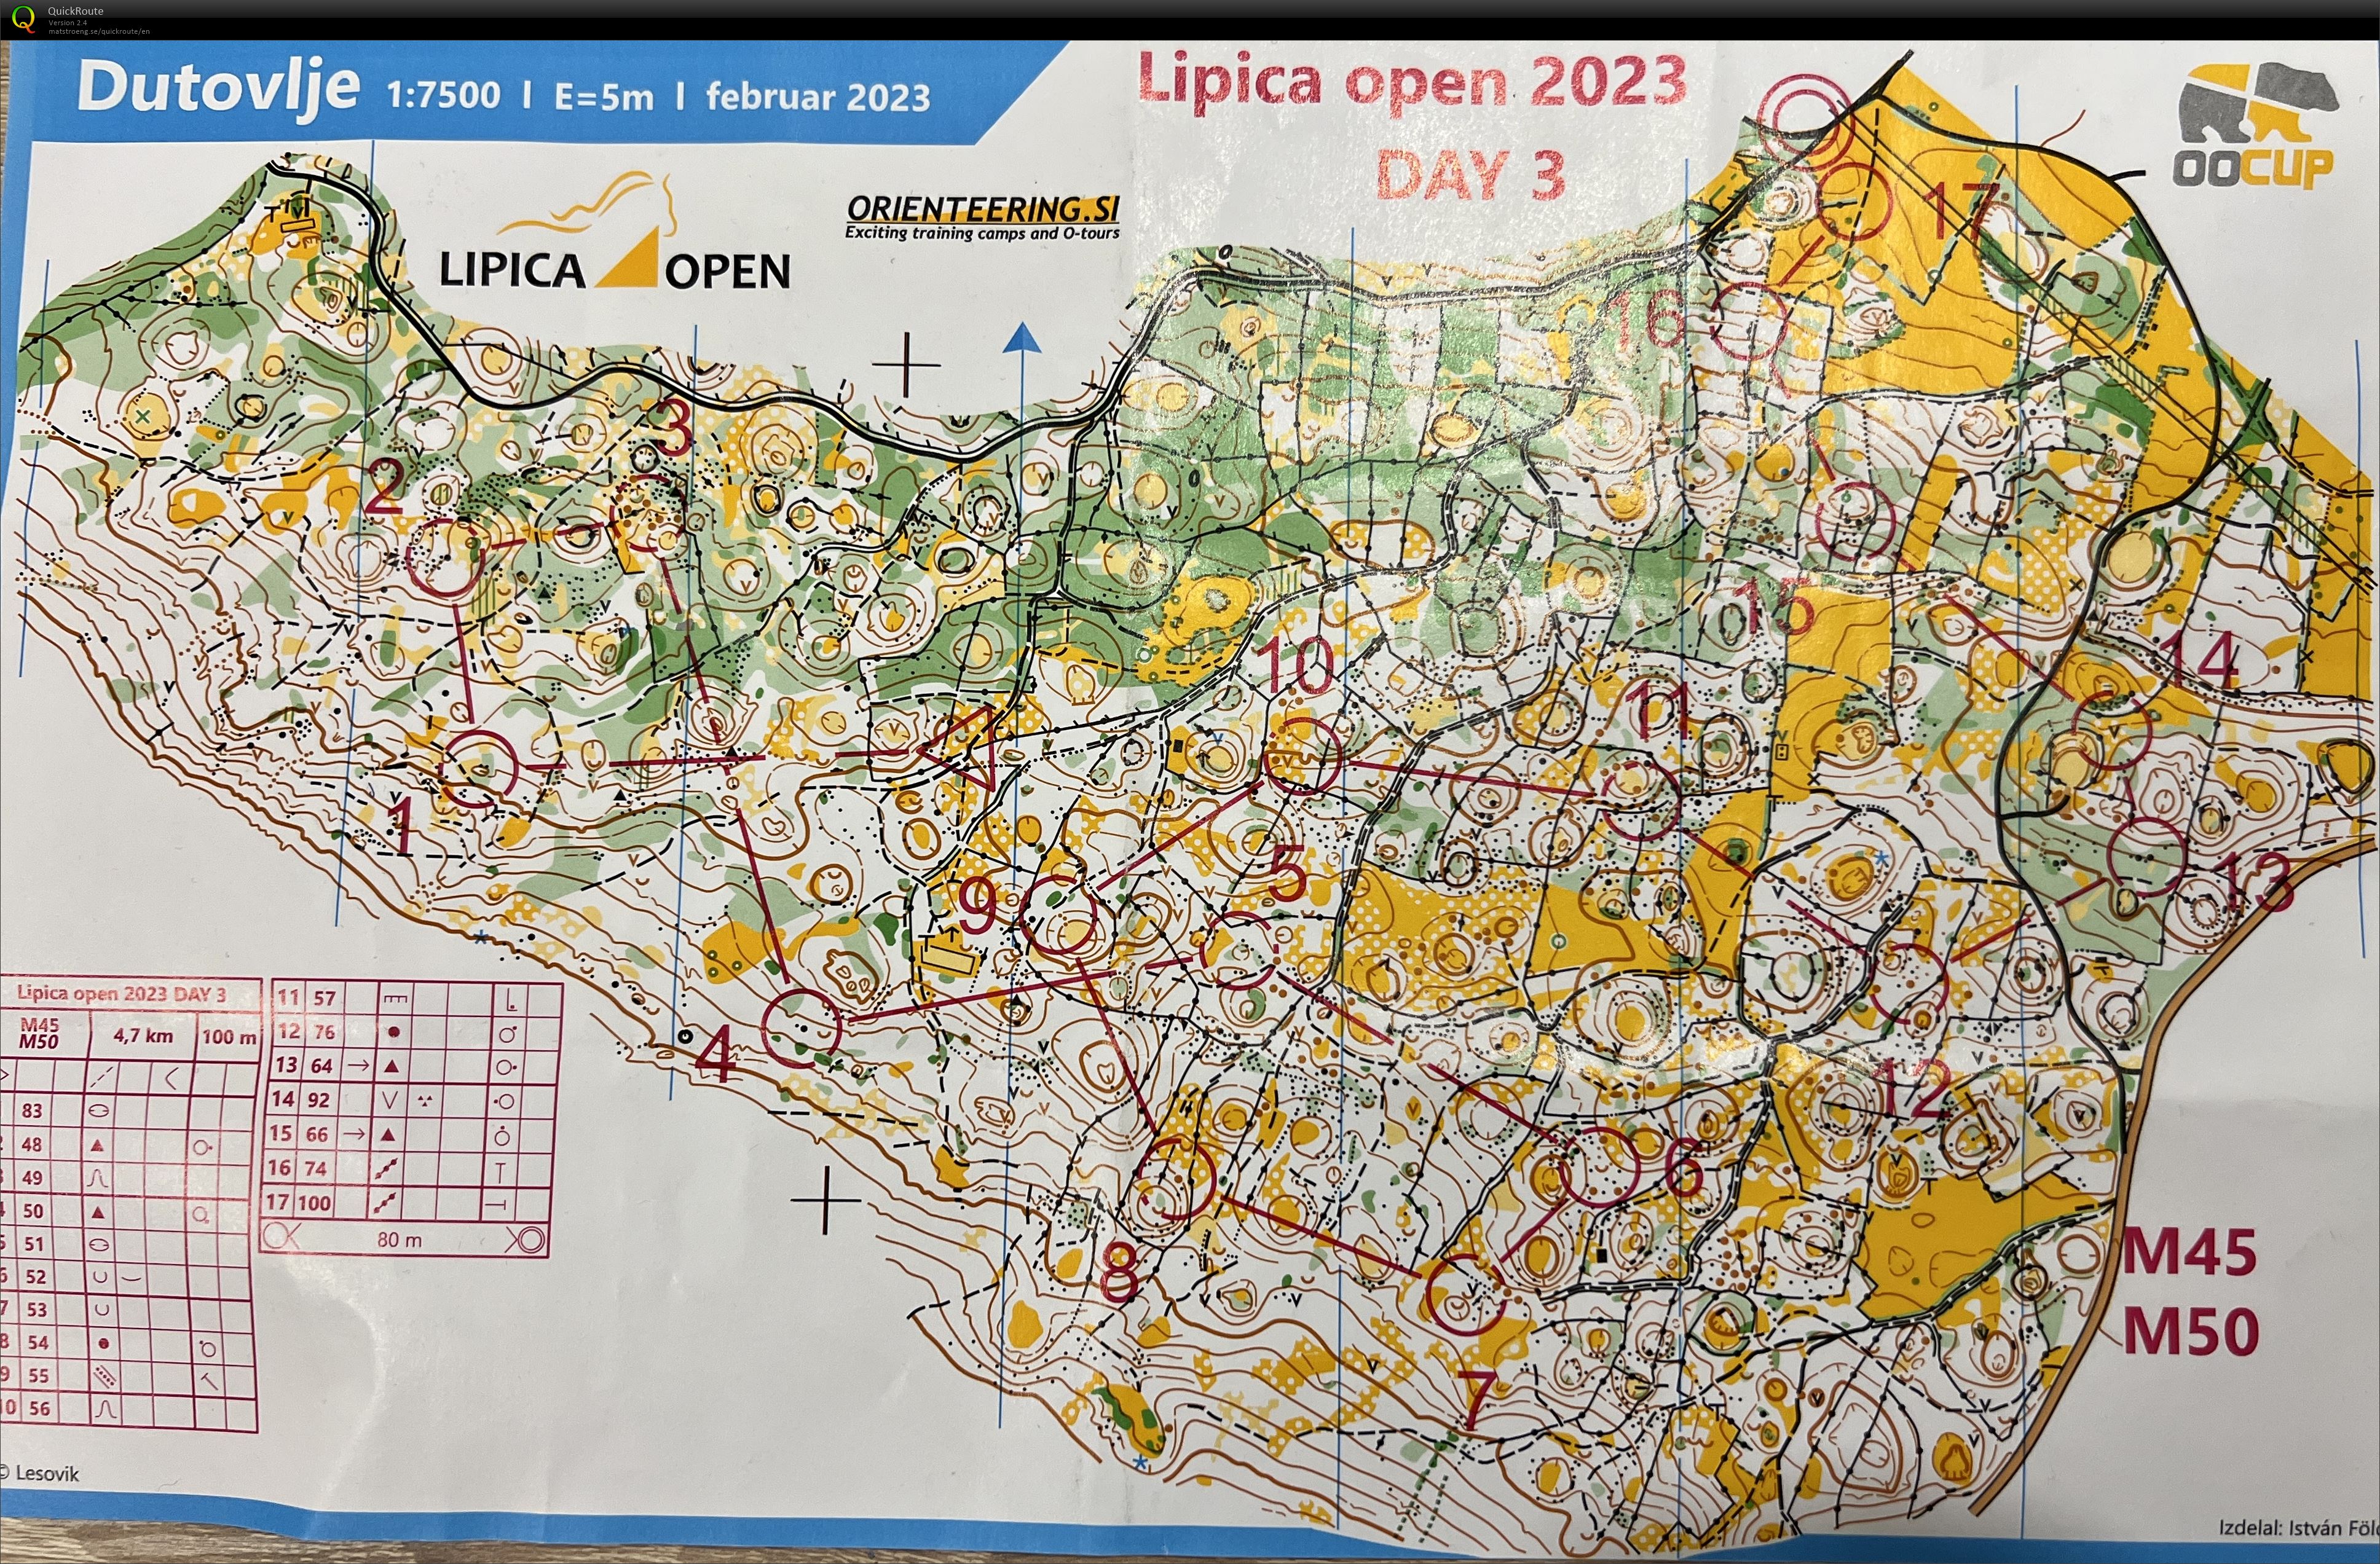 Lipica open 2023 (13.03.2023)